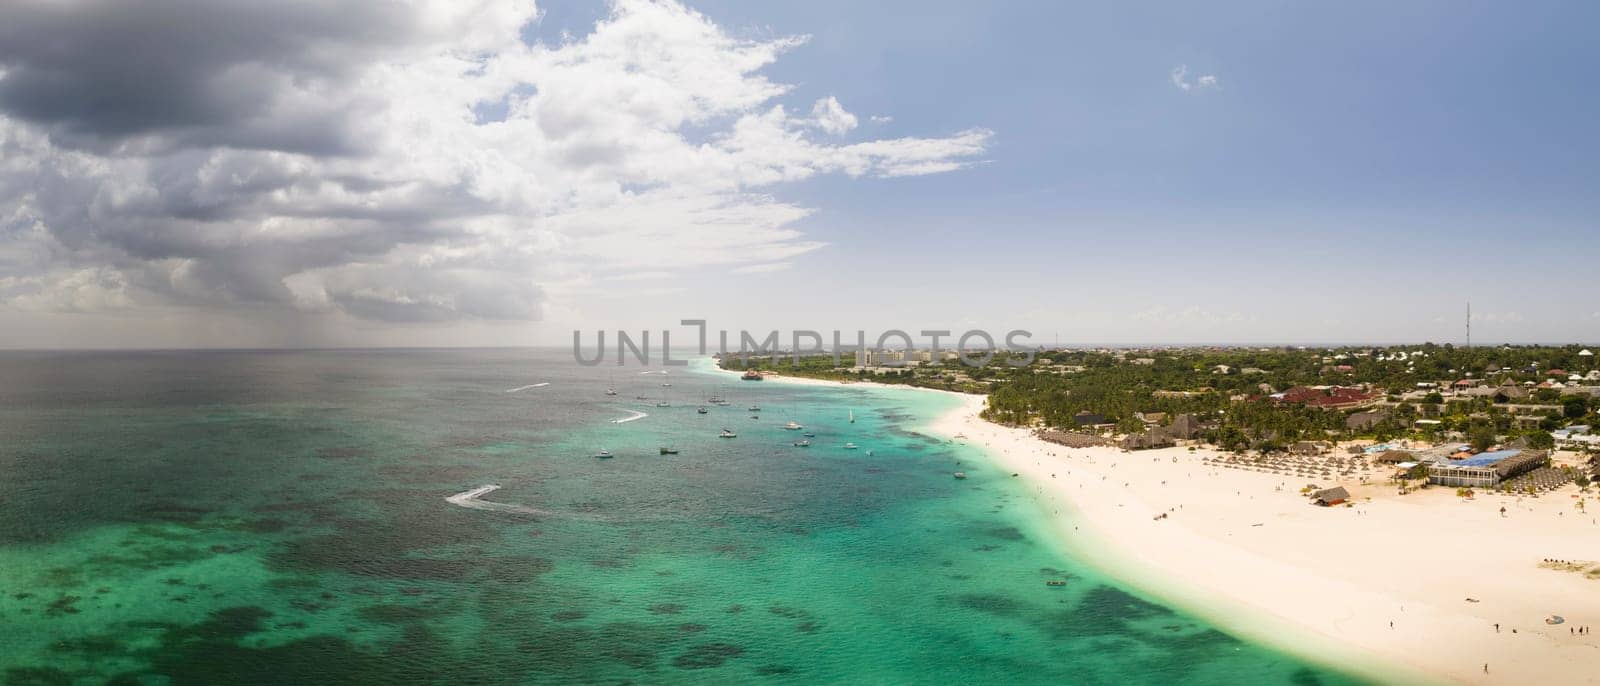 Zanzibar beach concept of summer vacation by Robertobinetti70